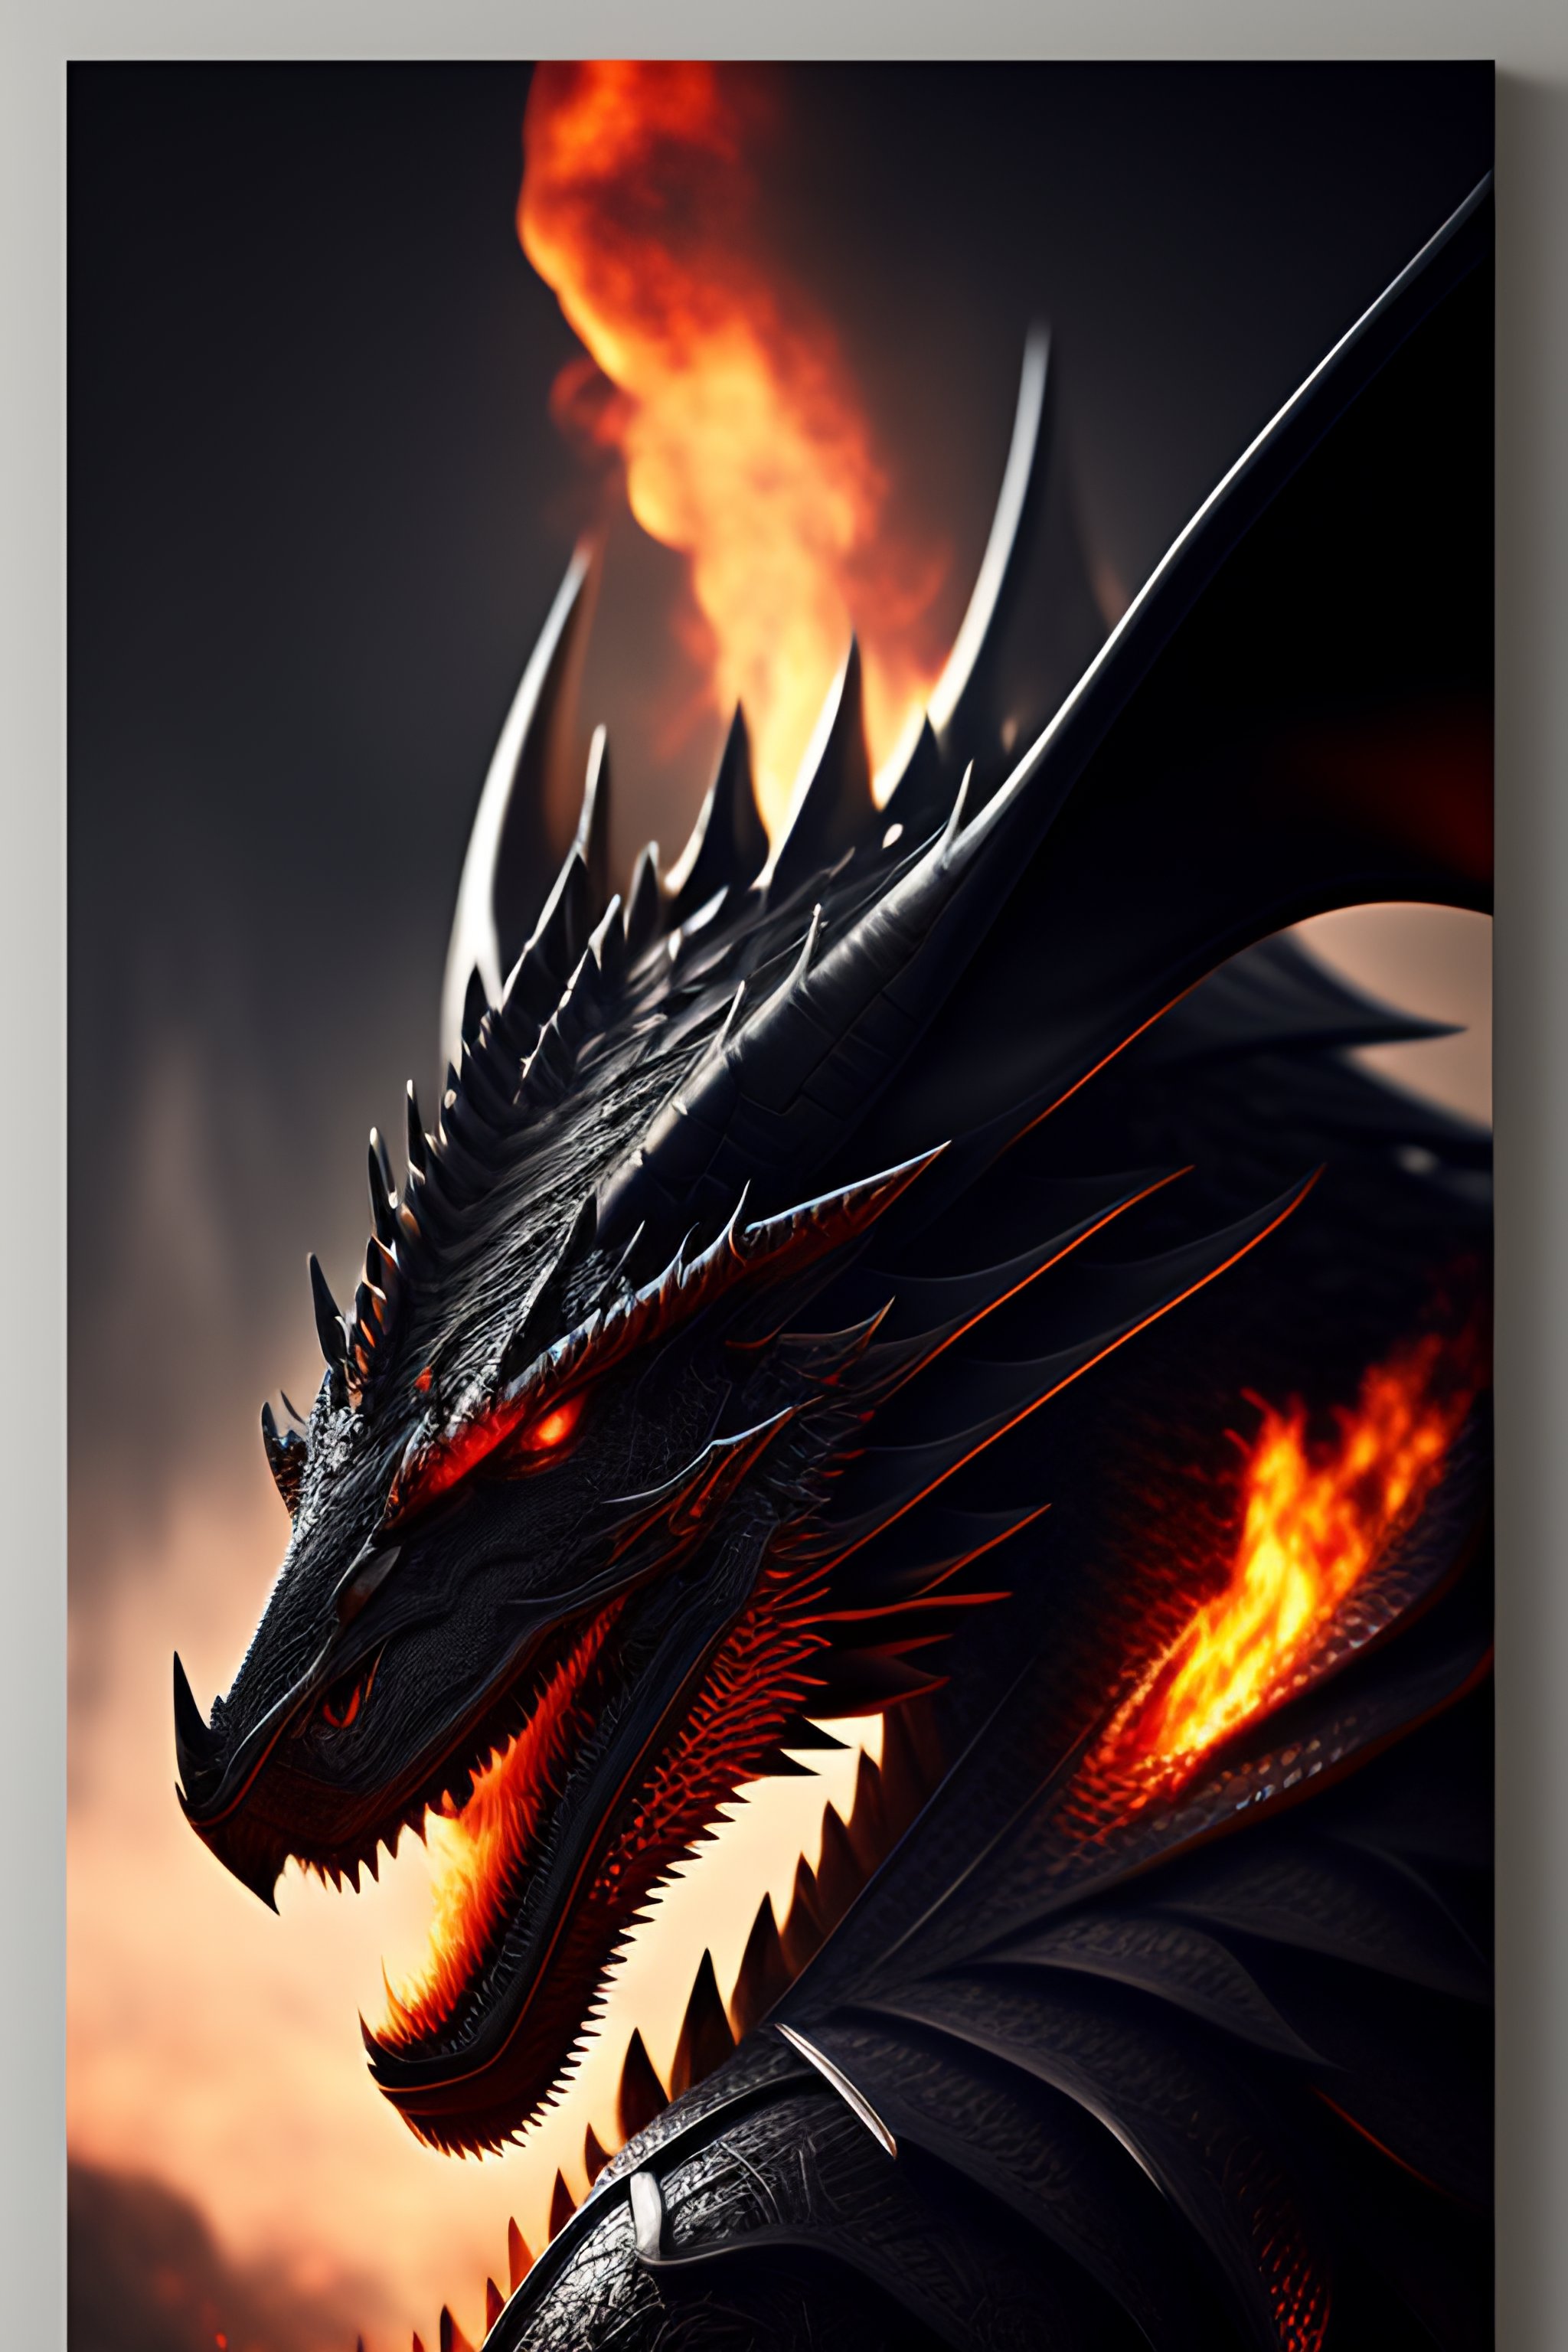 black dragons breathing fire